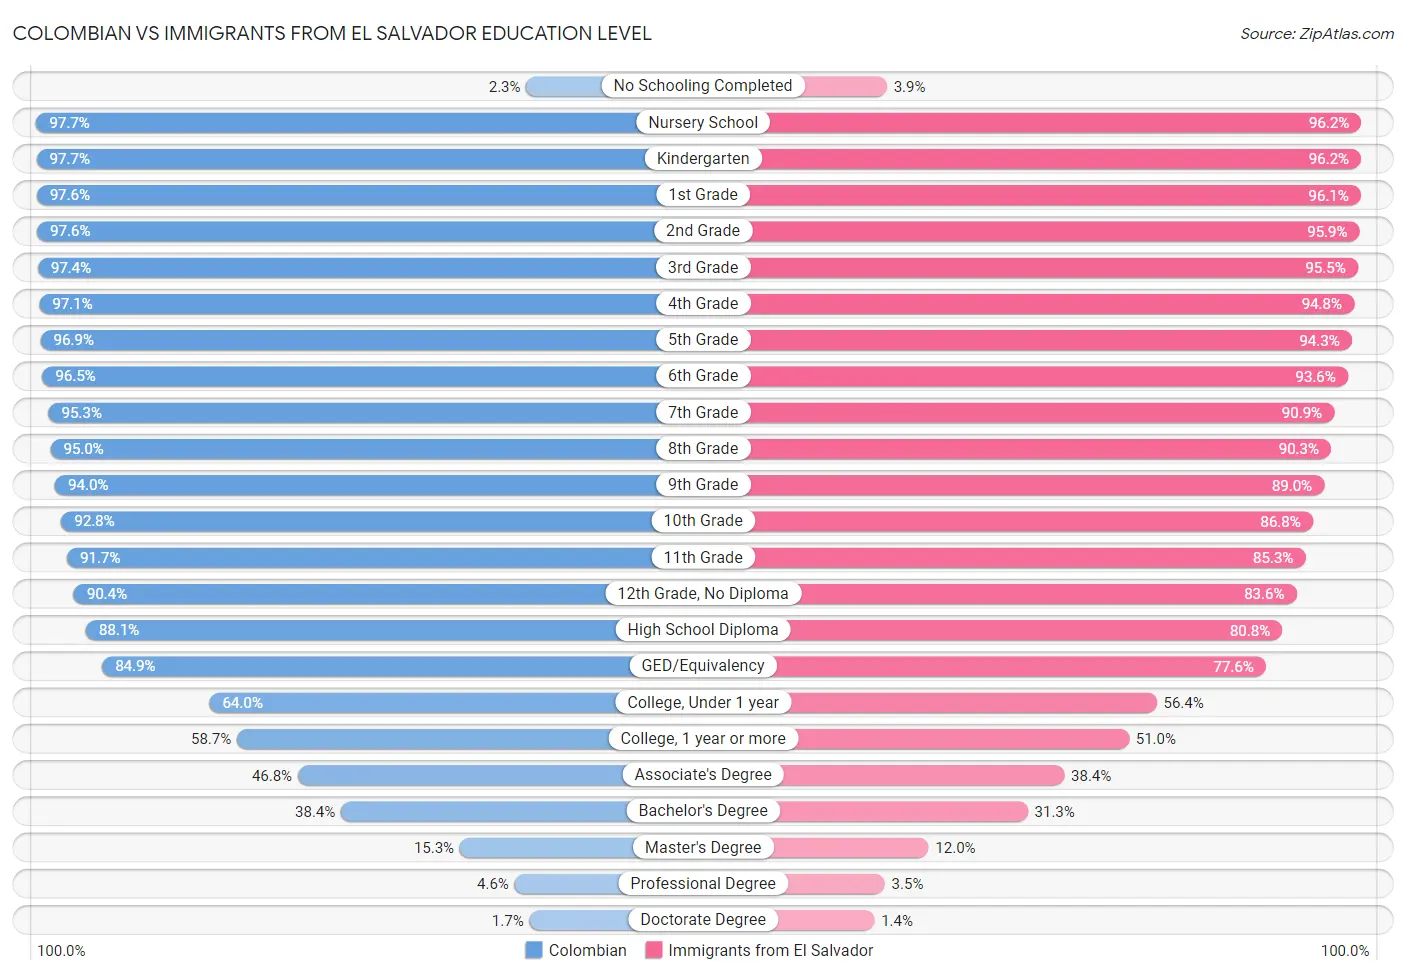 Colombian vs Immigrants from El Salvador Education Level